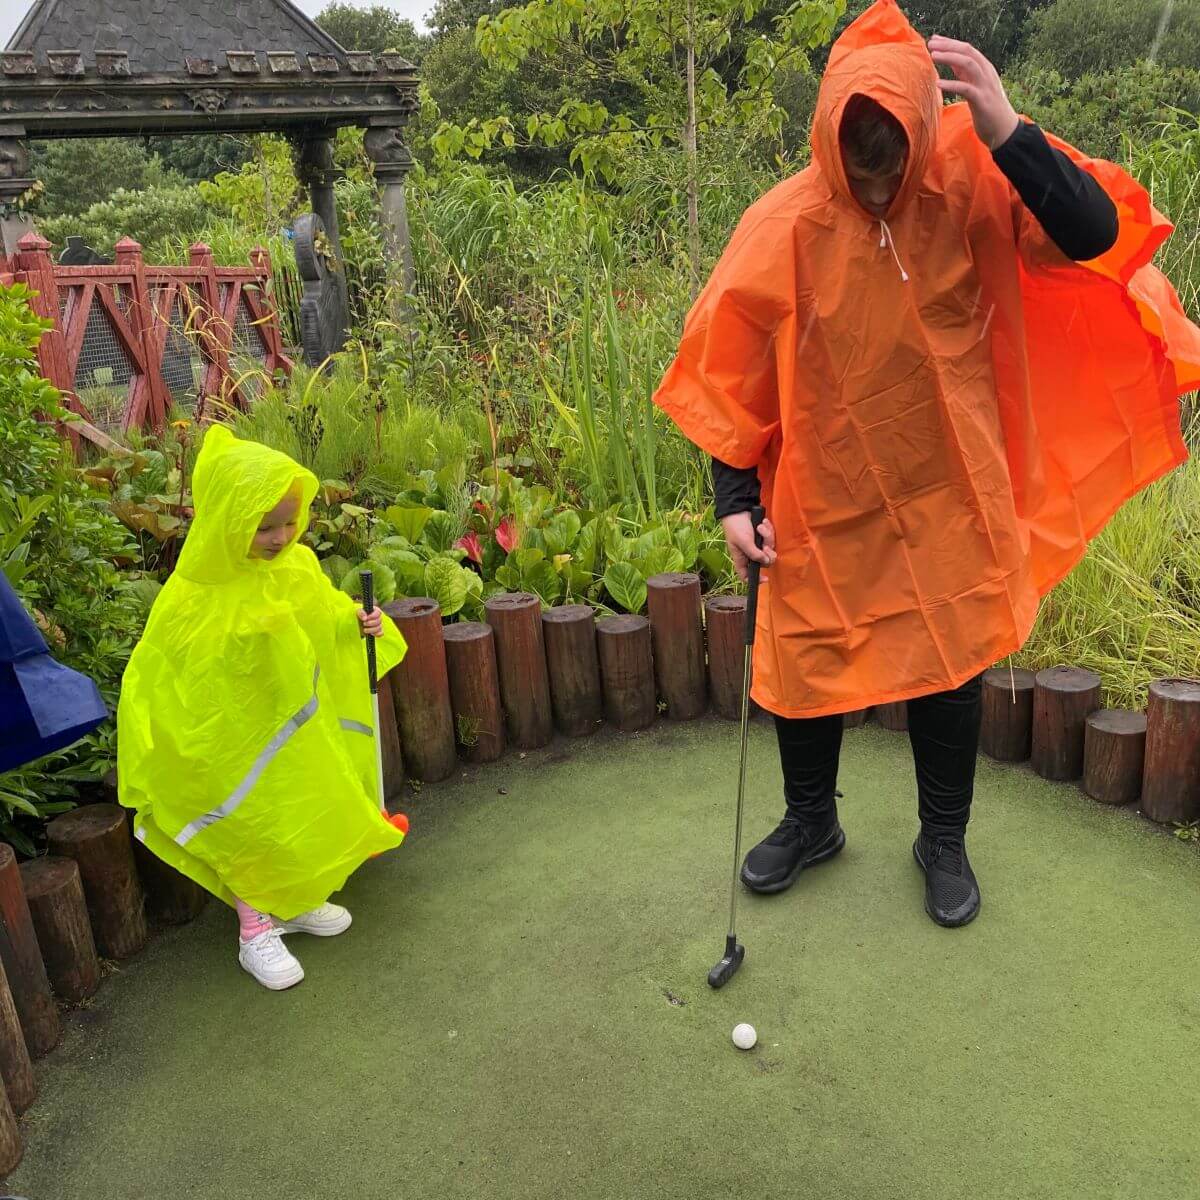 A man and child playing mini golf on holiday wearing rain macs.